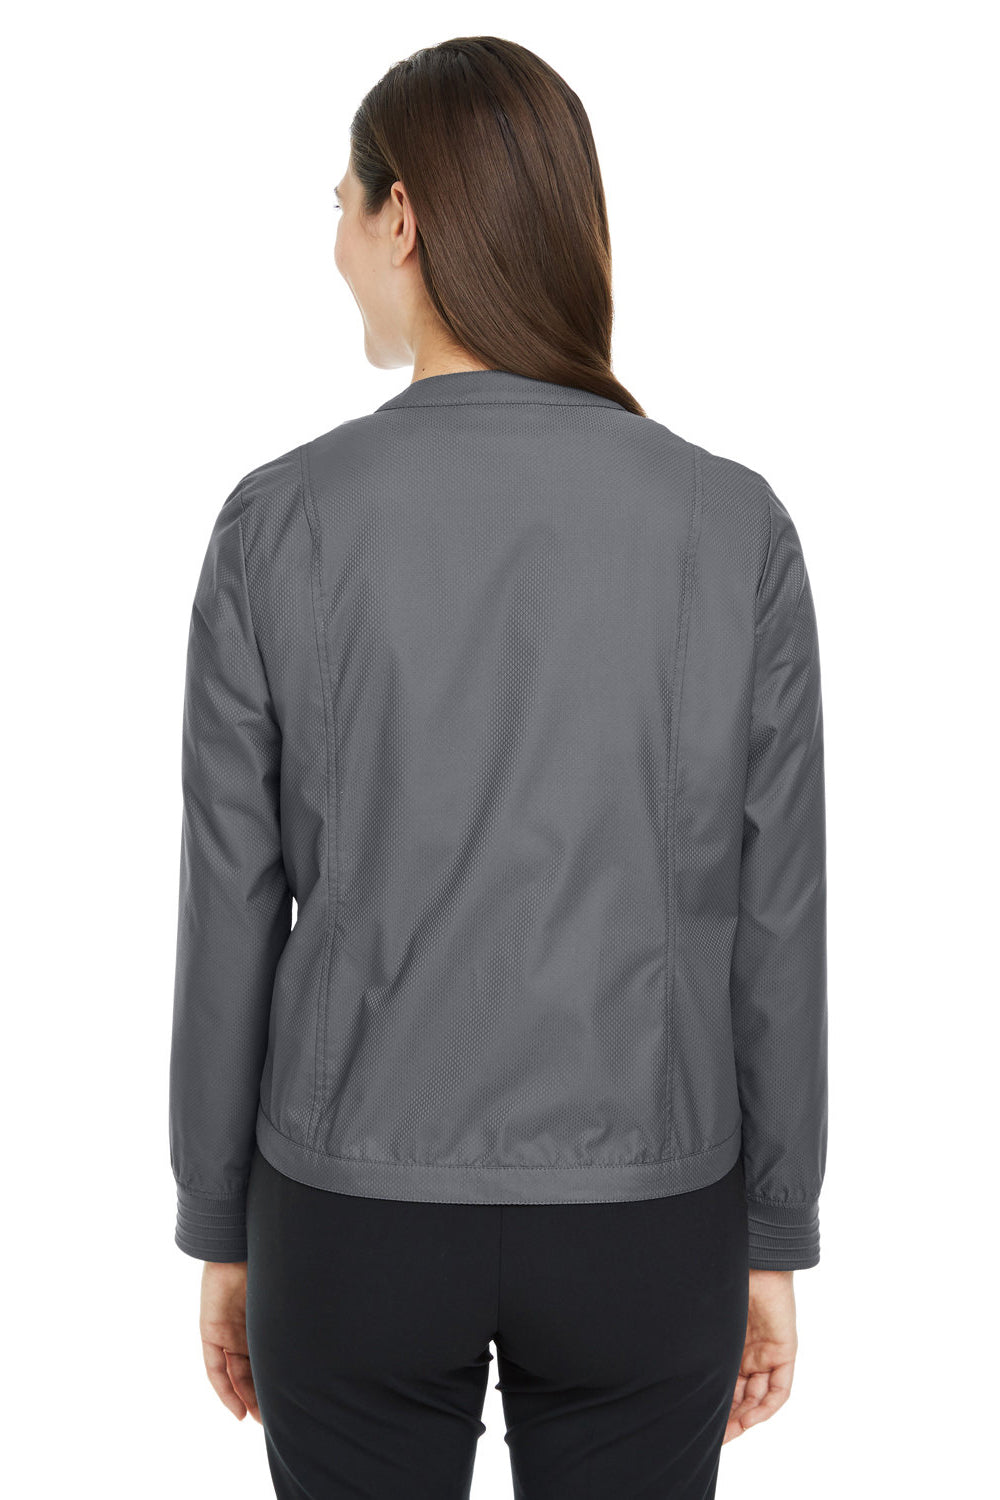 Devon & Jones DG700W Womens Vision Club Full Zip Jacket Graphite Grey Back